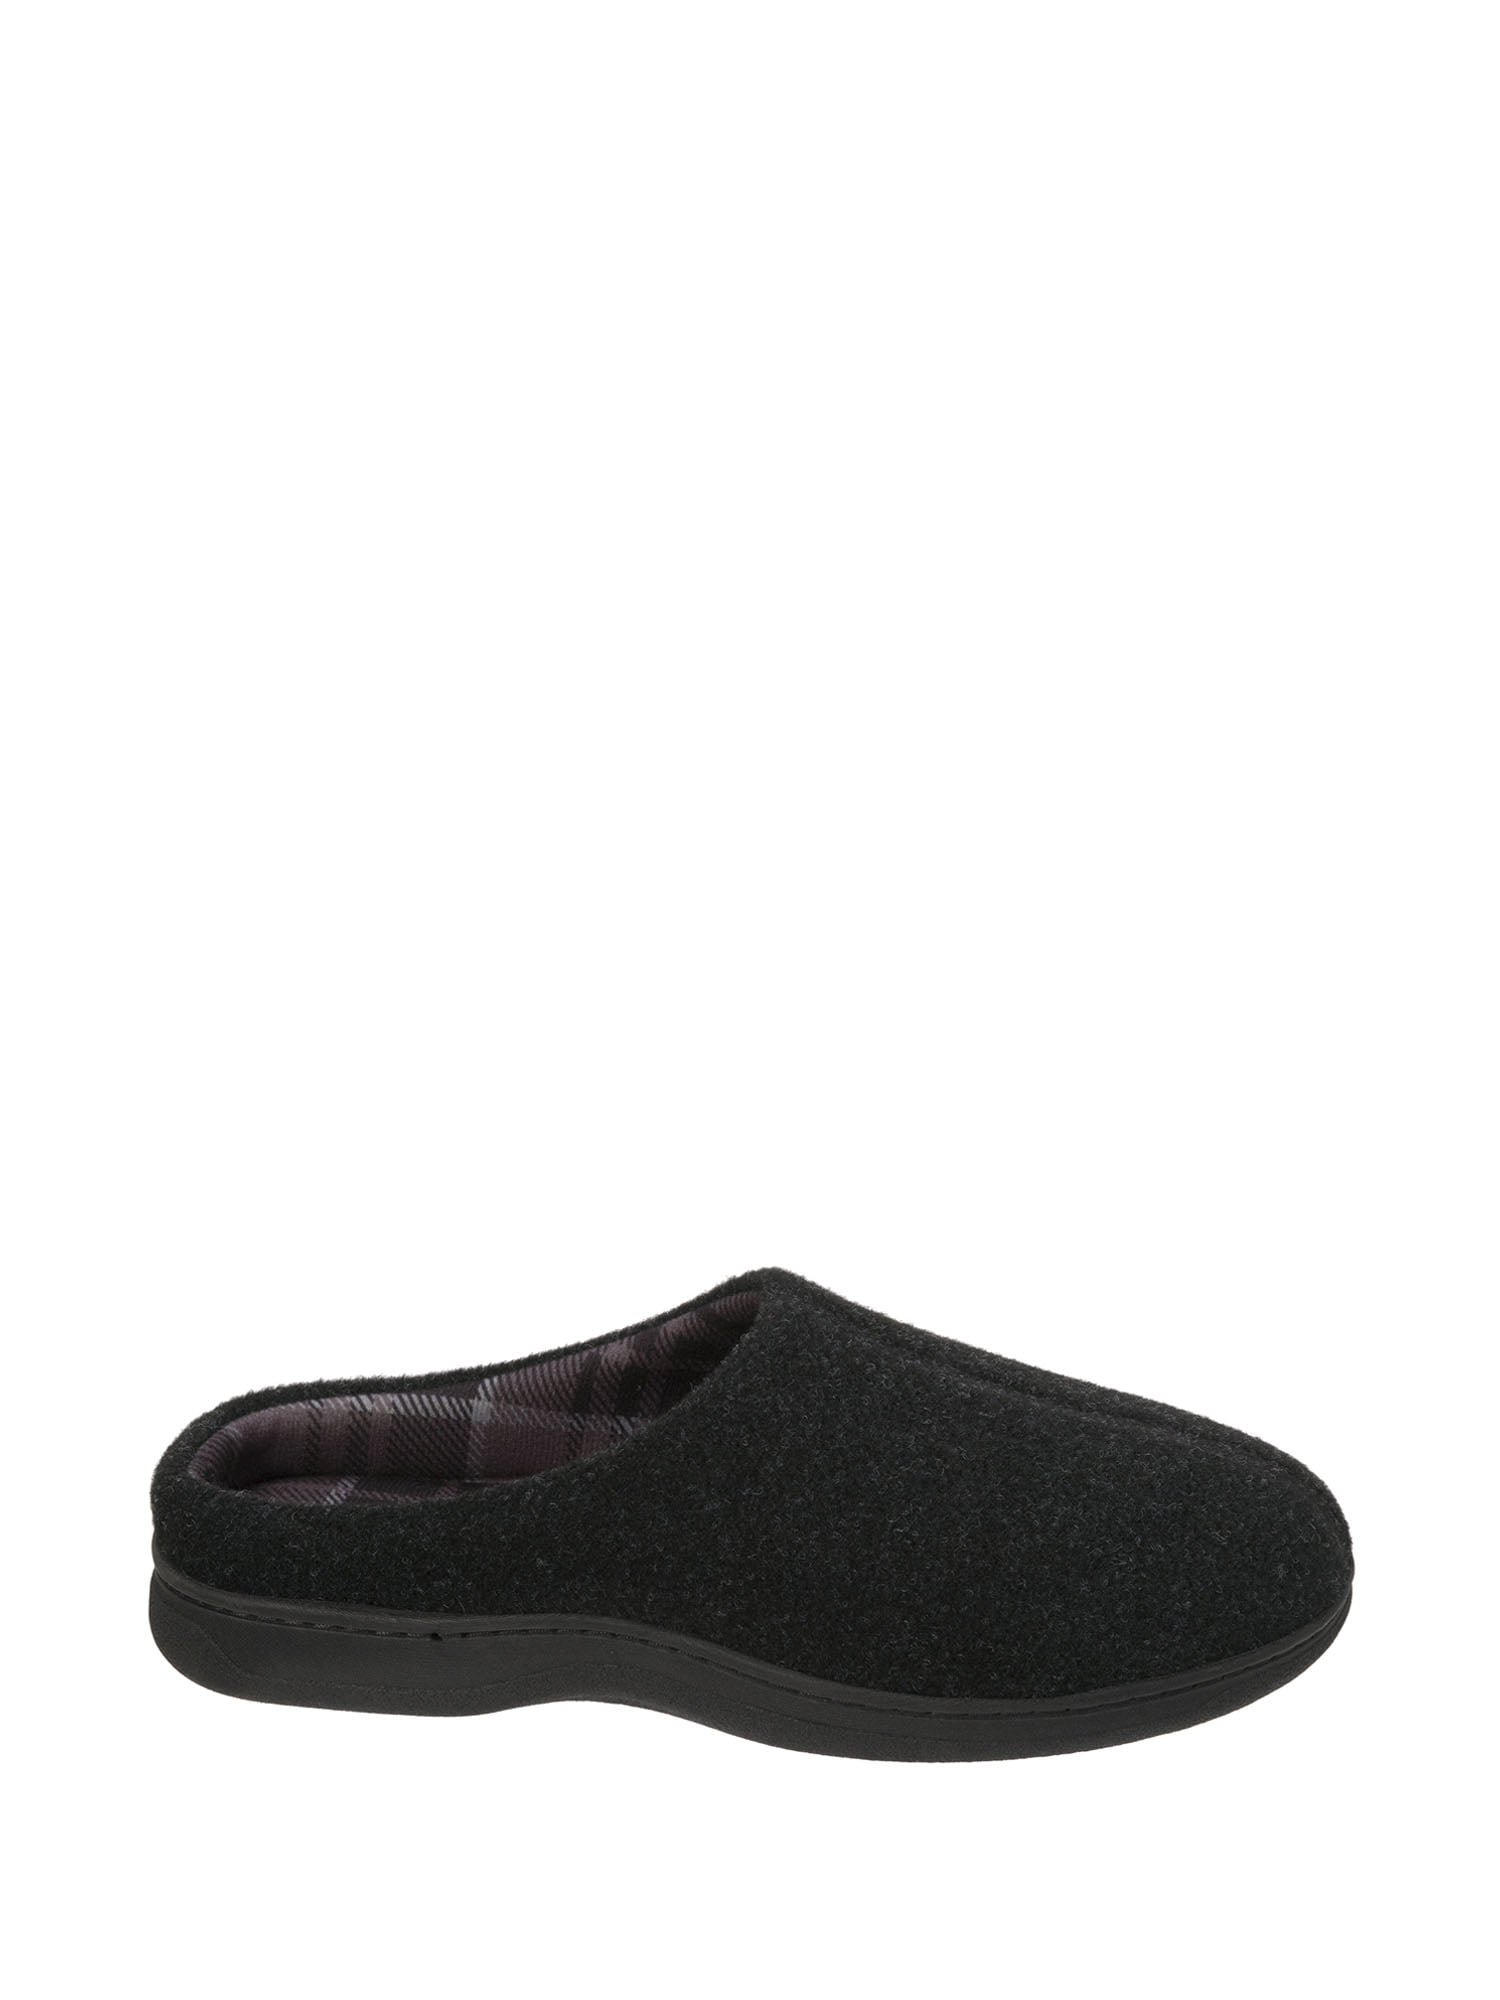 tamarac by slippers international men's scuffy 8117 clog slipper